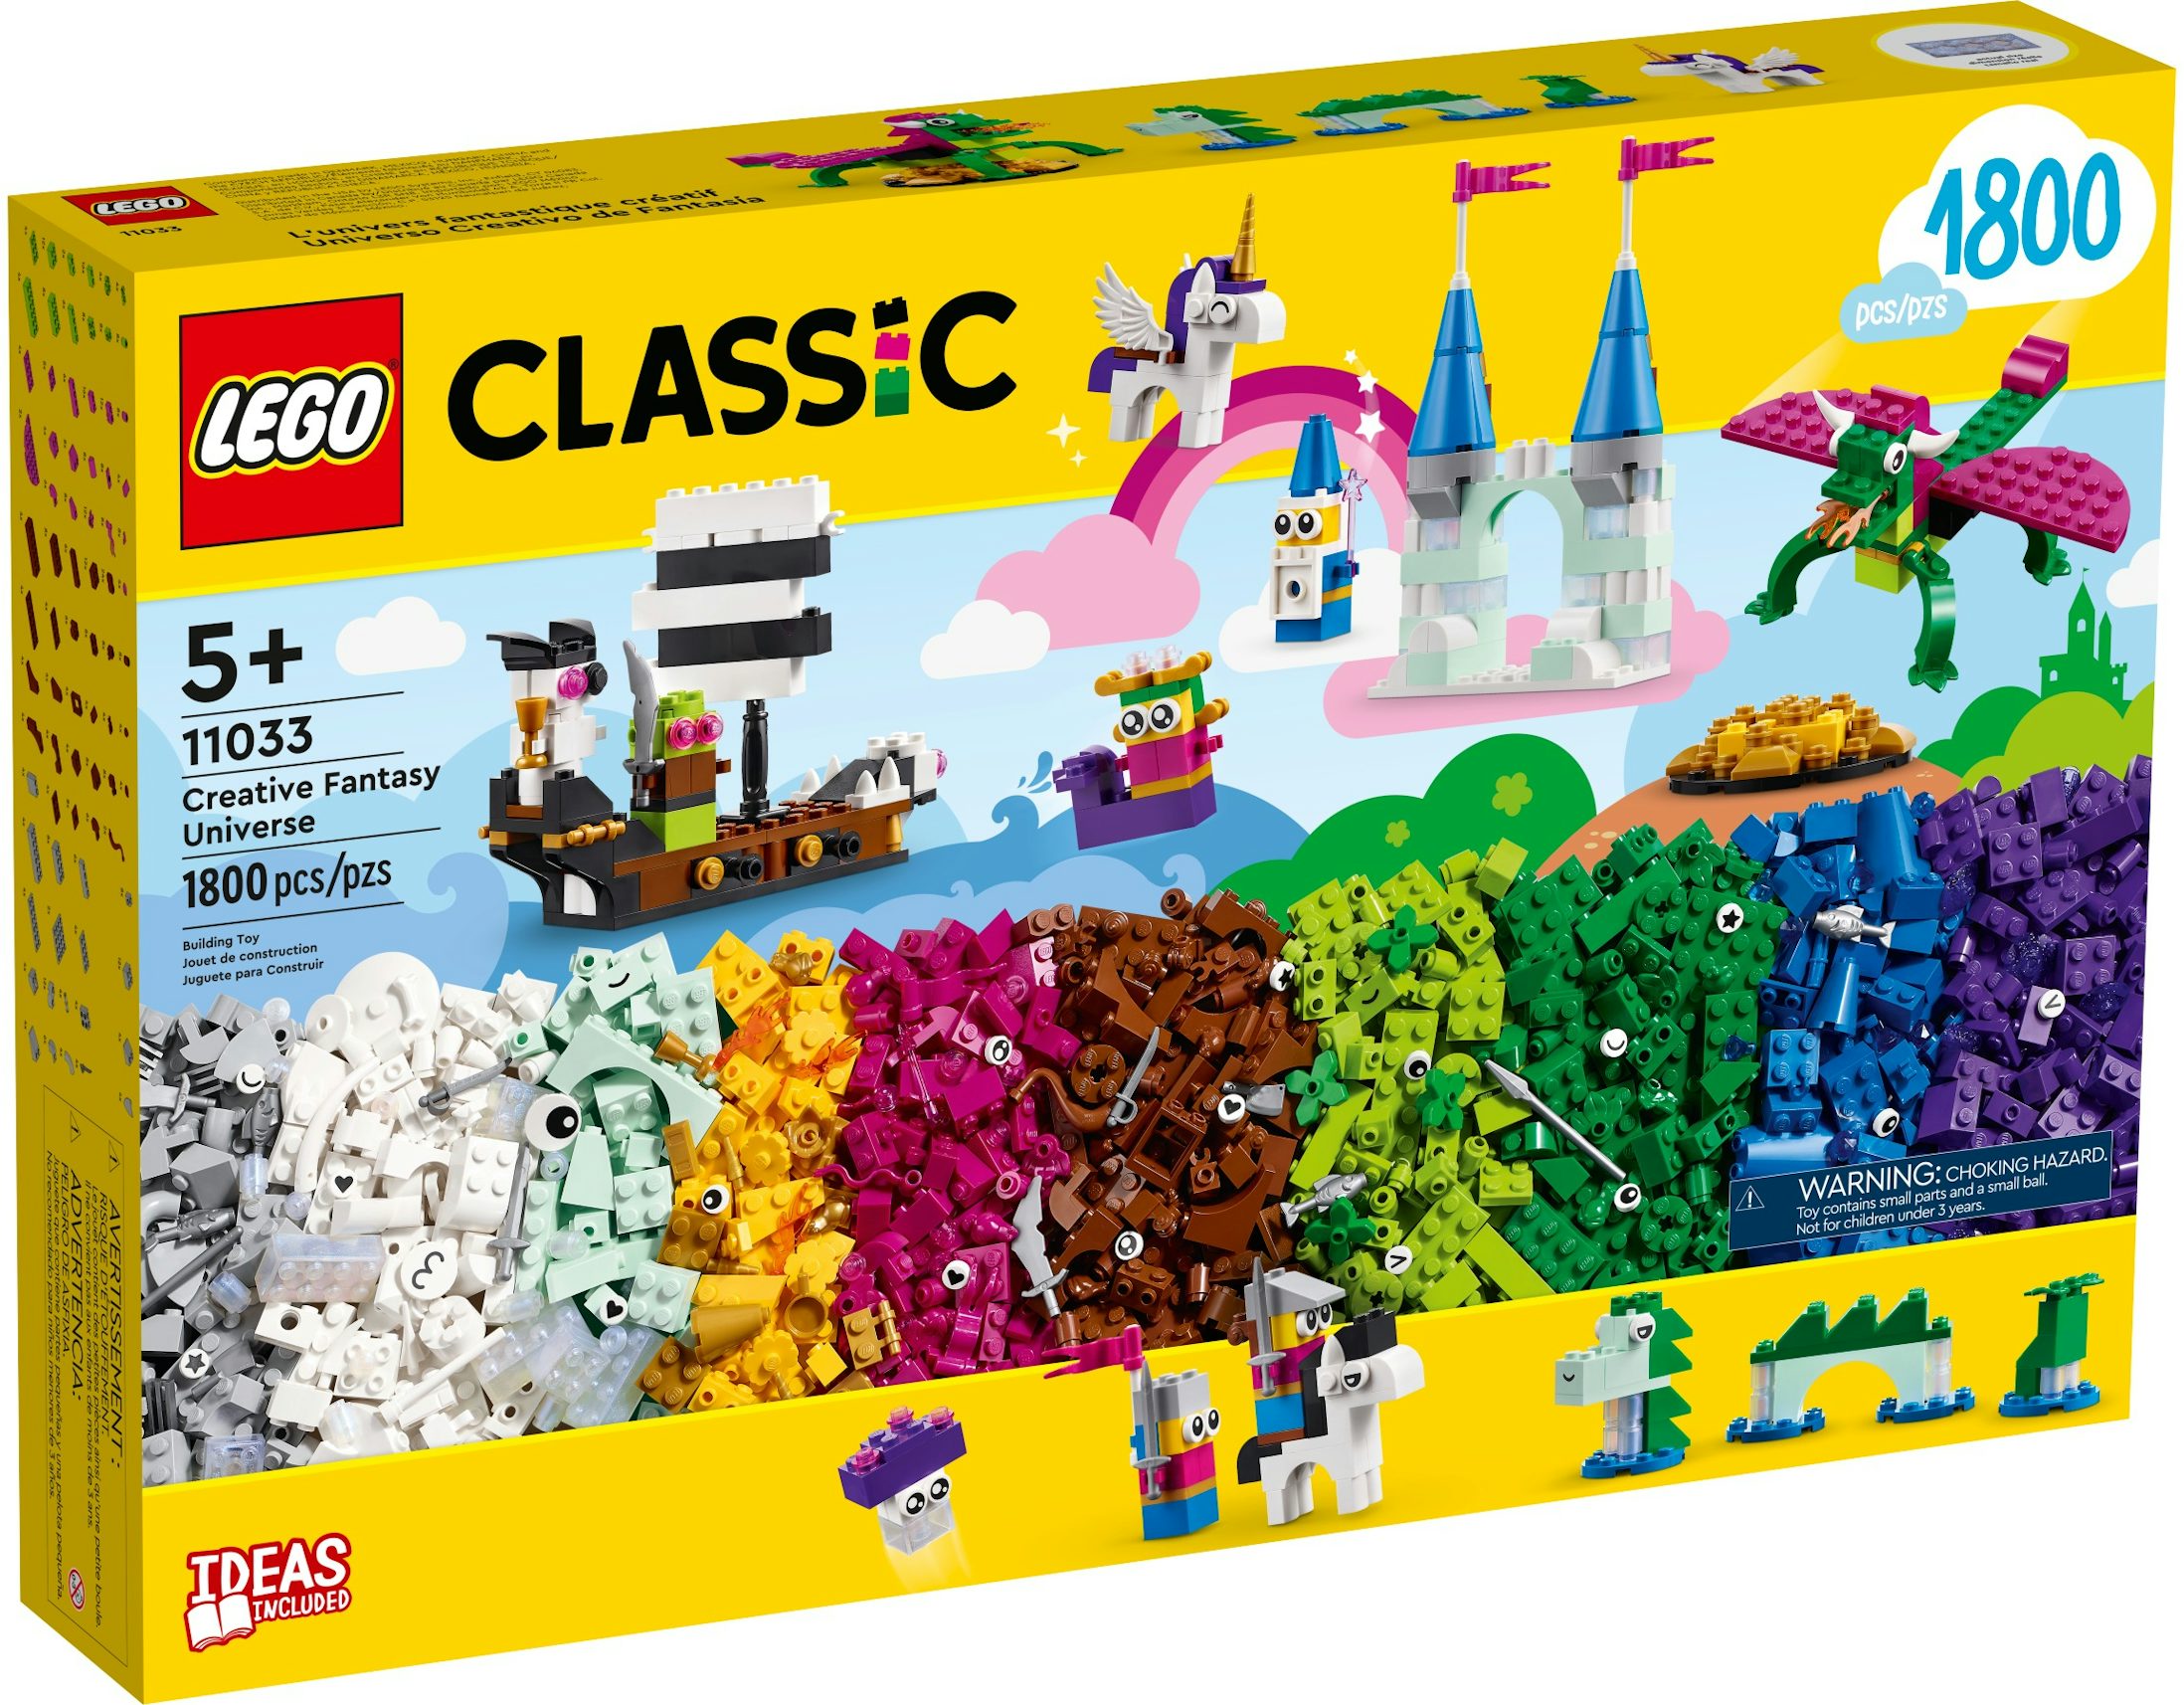 LEGO Classic Creative Fantasy Universe Set 11033 - US